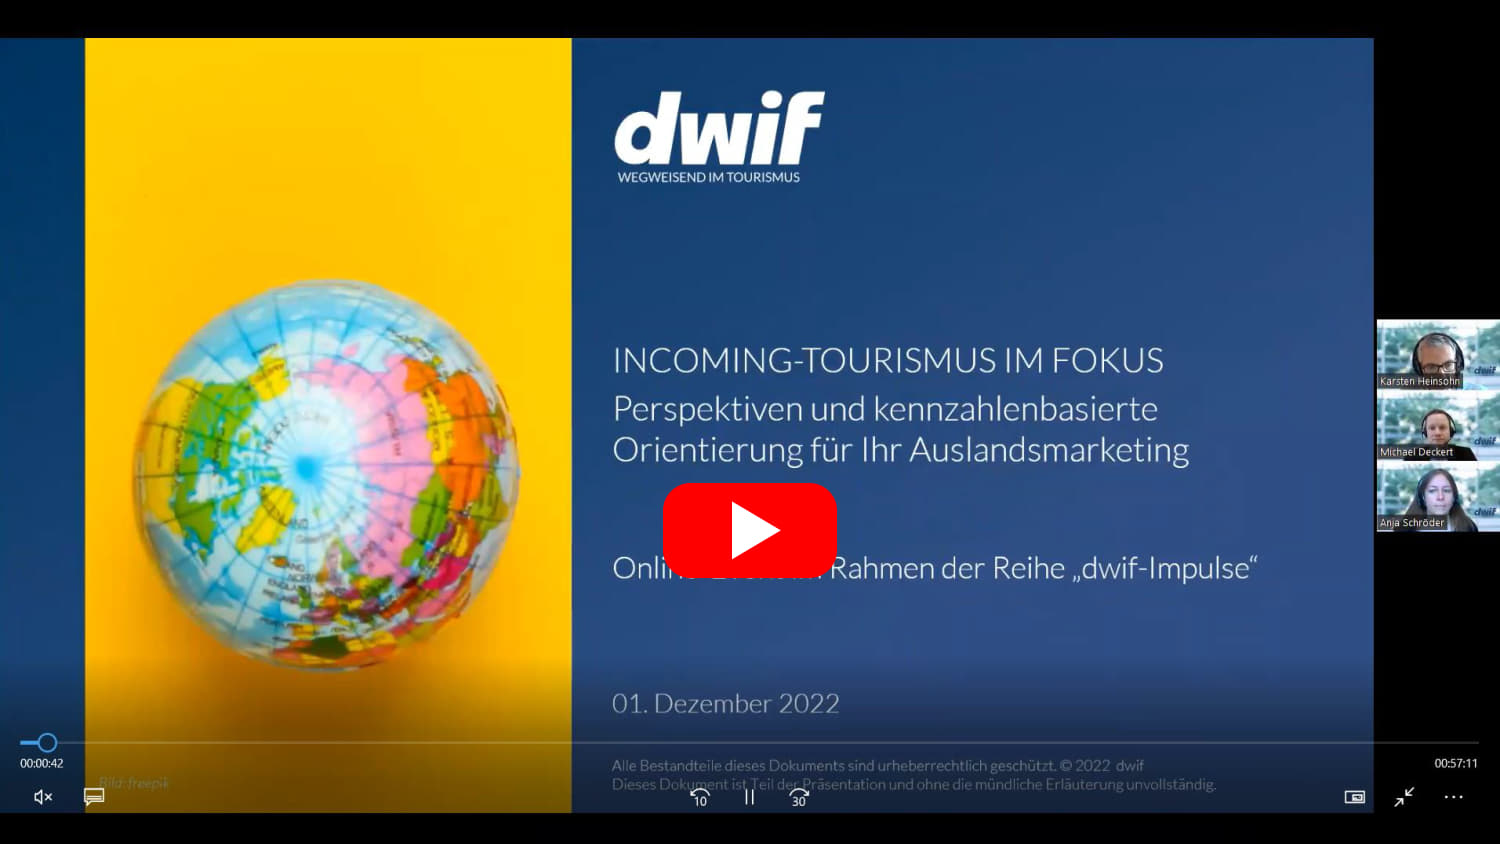 dwif-Impulse: Incoming Tourismus